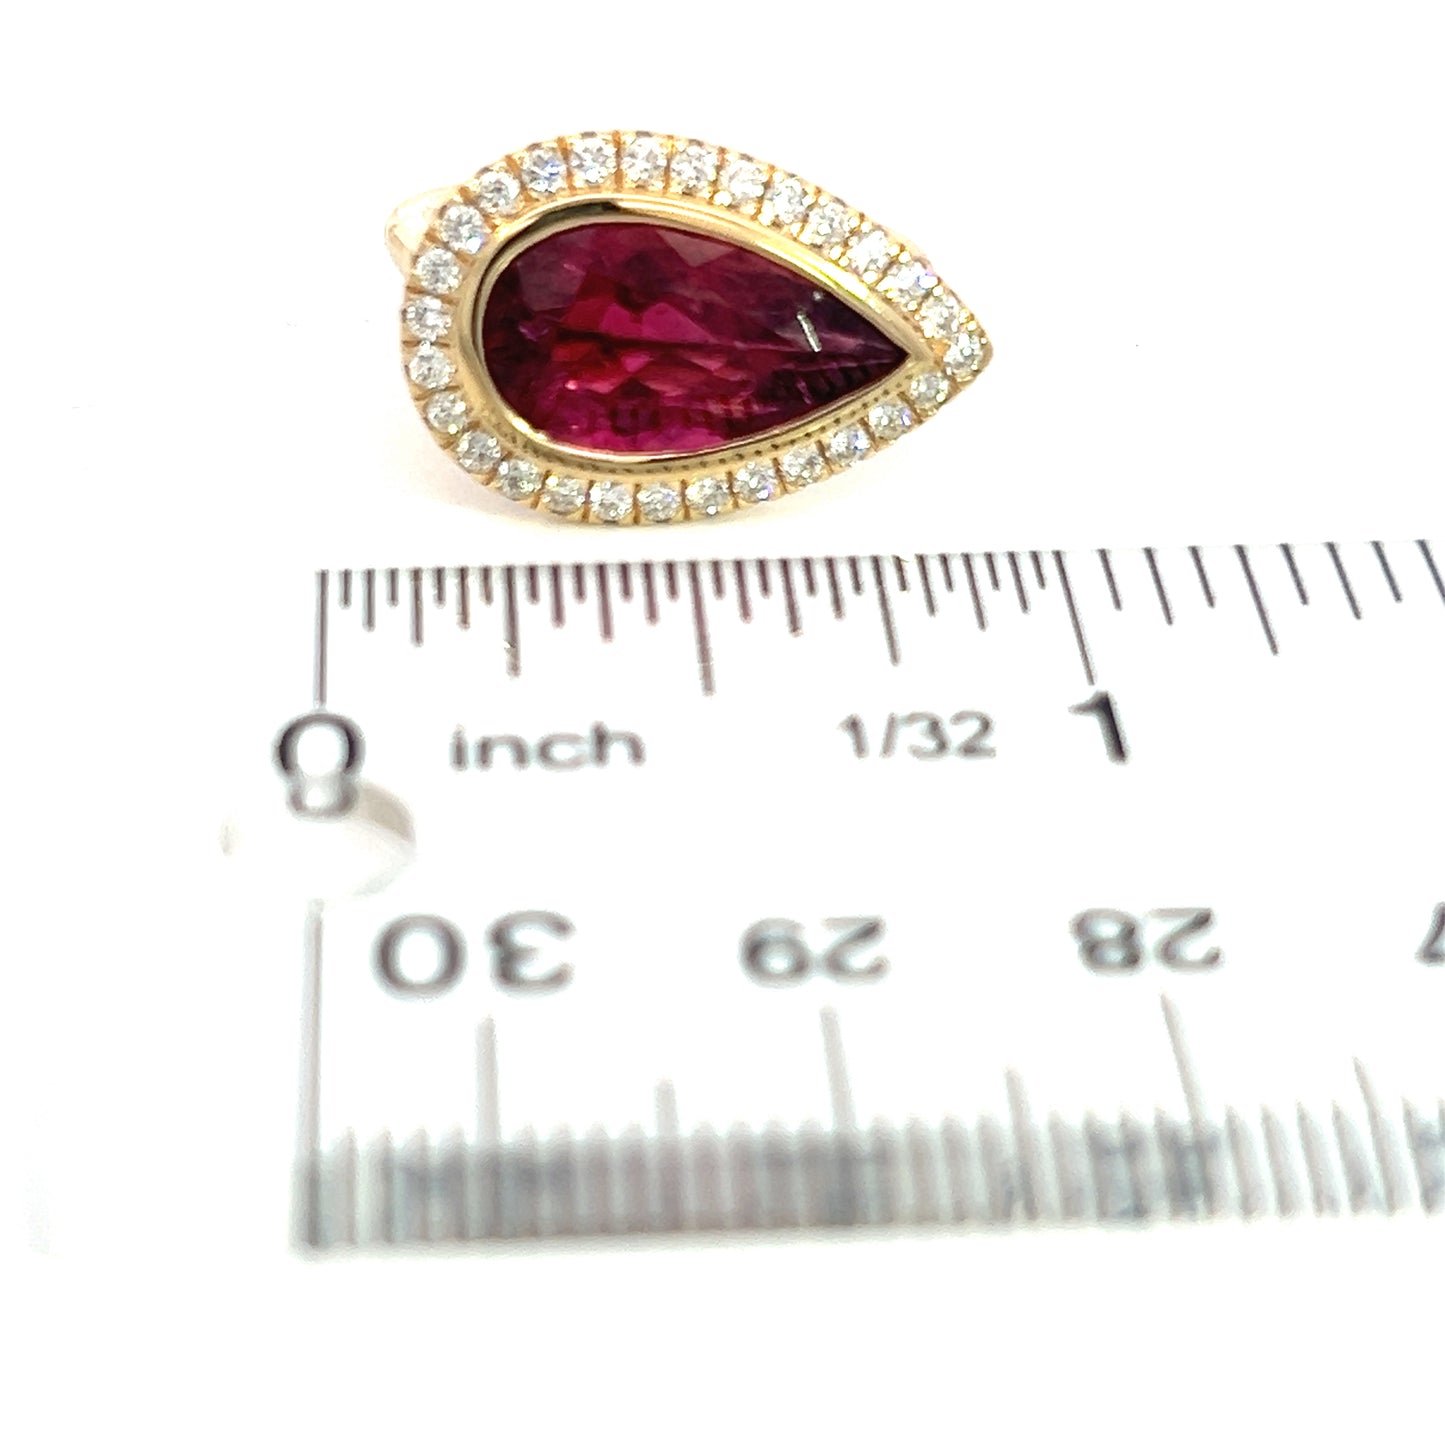 Natural Rubellite Diamond Ring 6.5 14k Y Gold 4.68 TCW Certified $5,950 310648